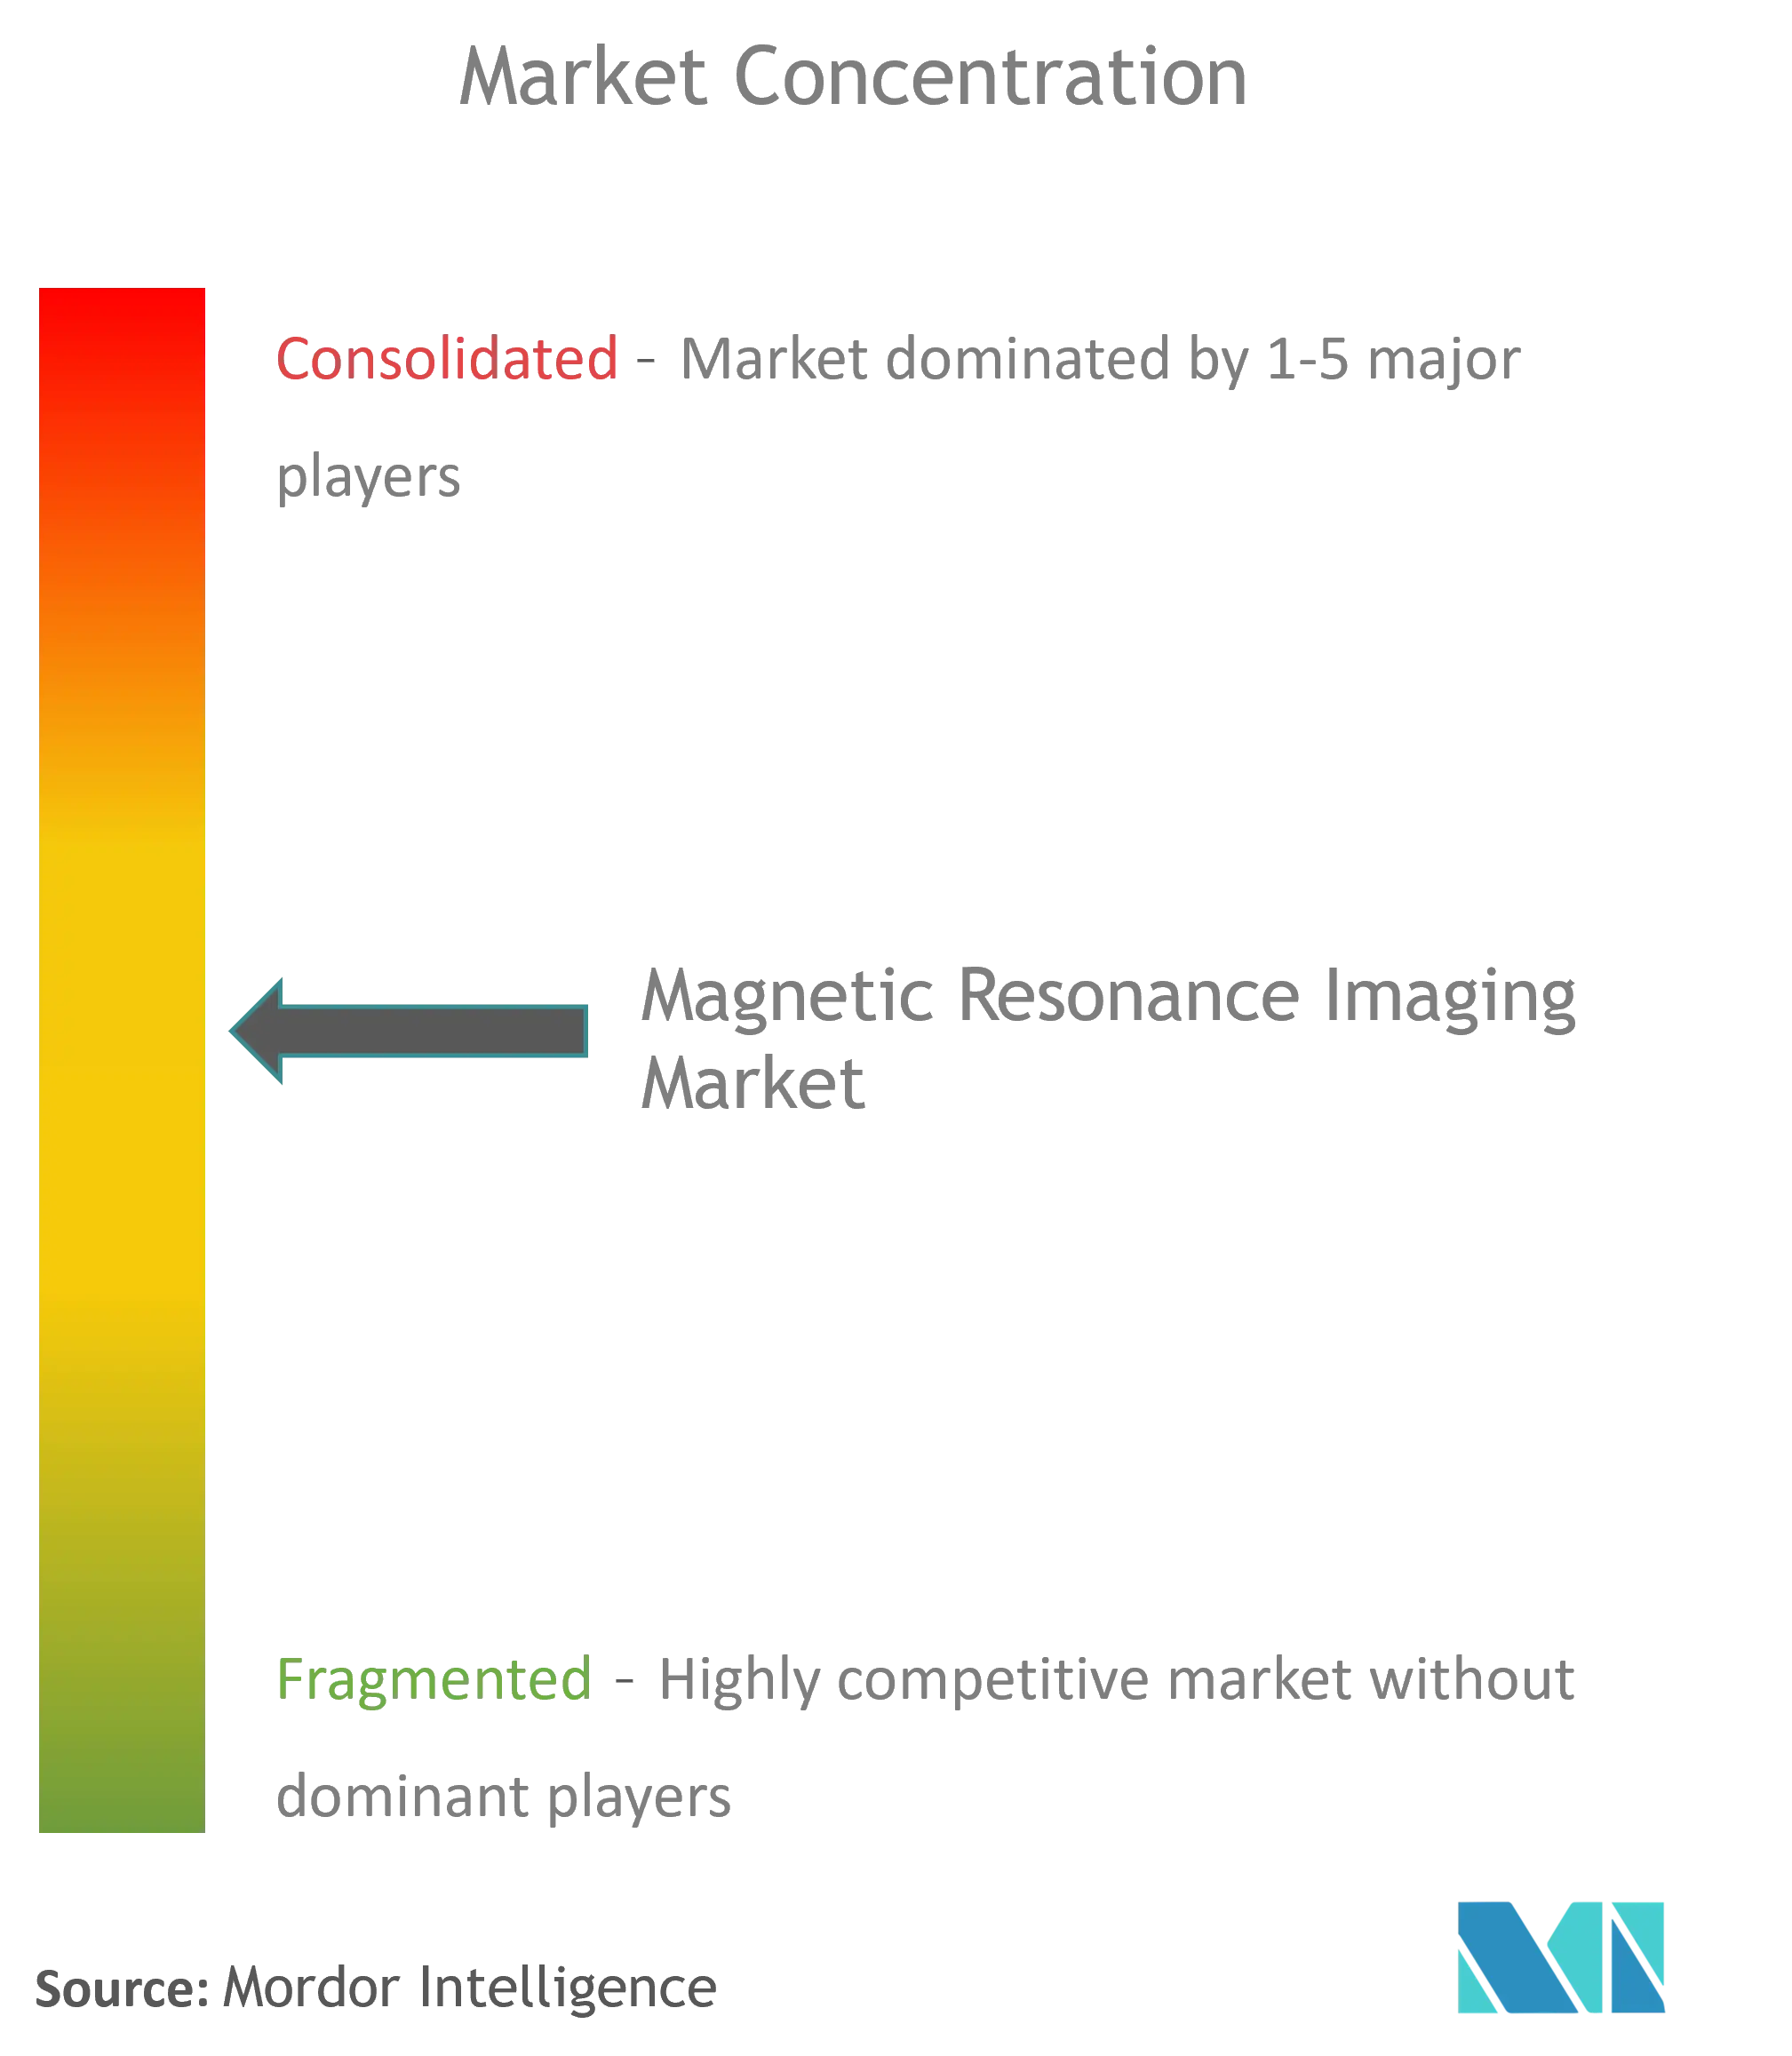 Magnetic Resonance Imaging Market Concentration